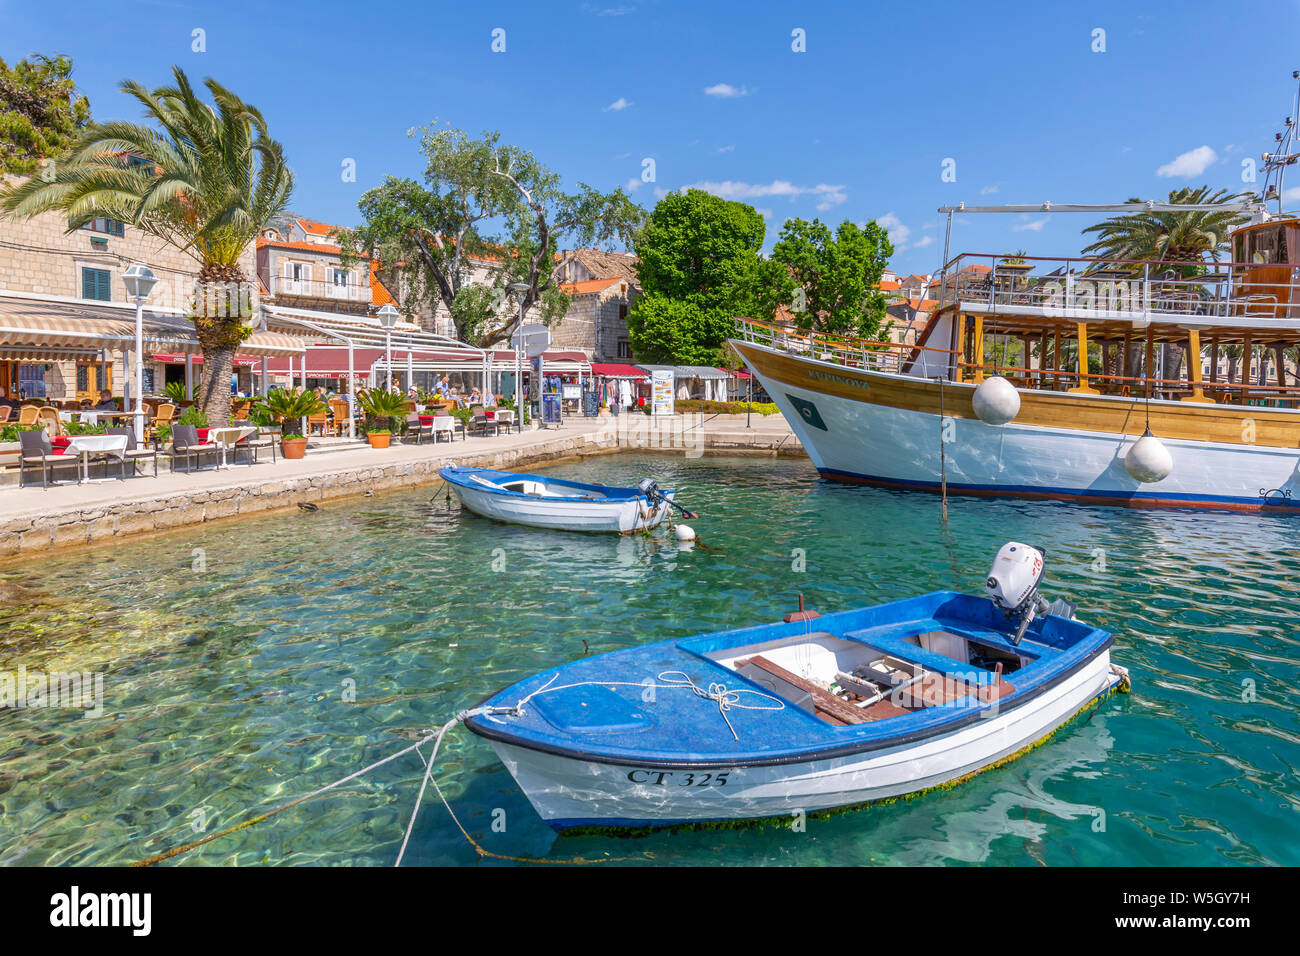 View of harbourside restaurants in Cavtat on the Adriatic Sea, Cavtat, Dubrovnik Riviera, Croatia, Europe Stock Photo